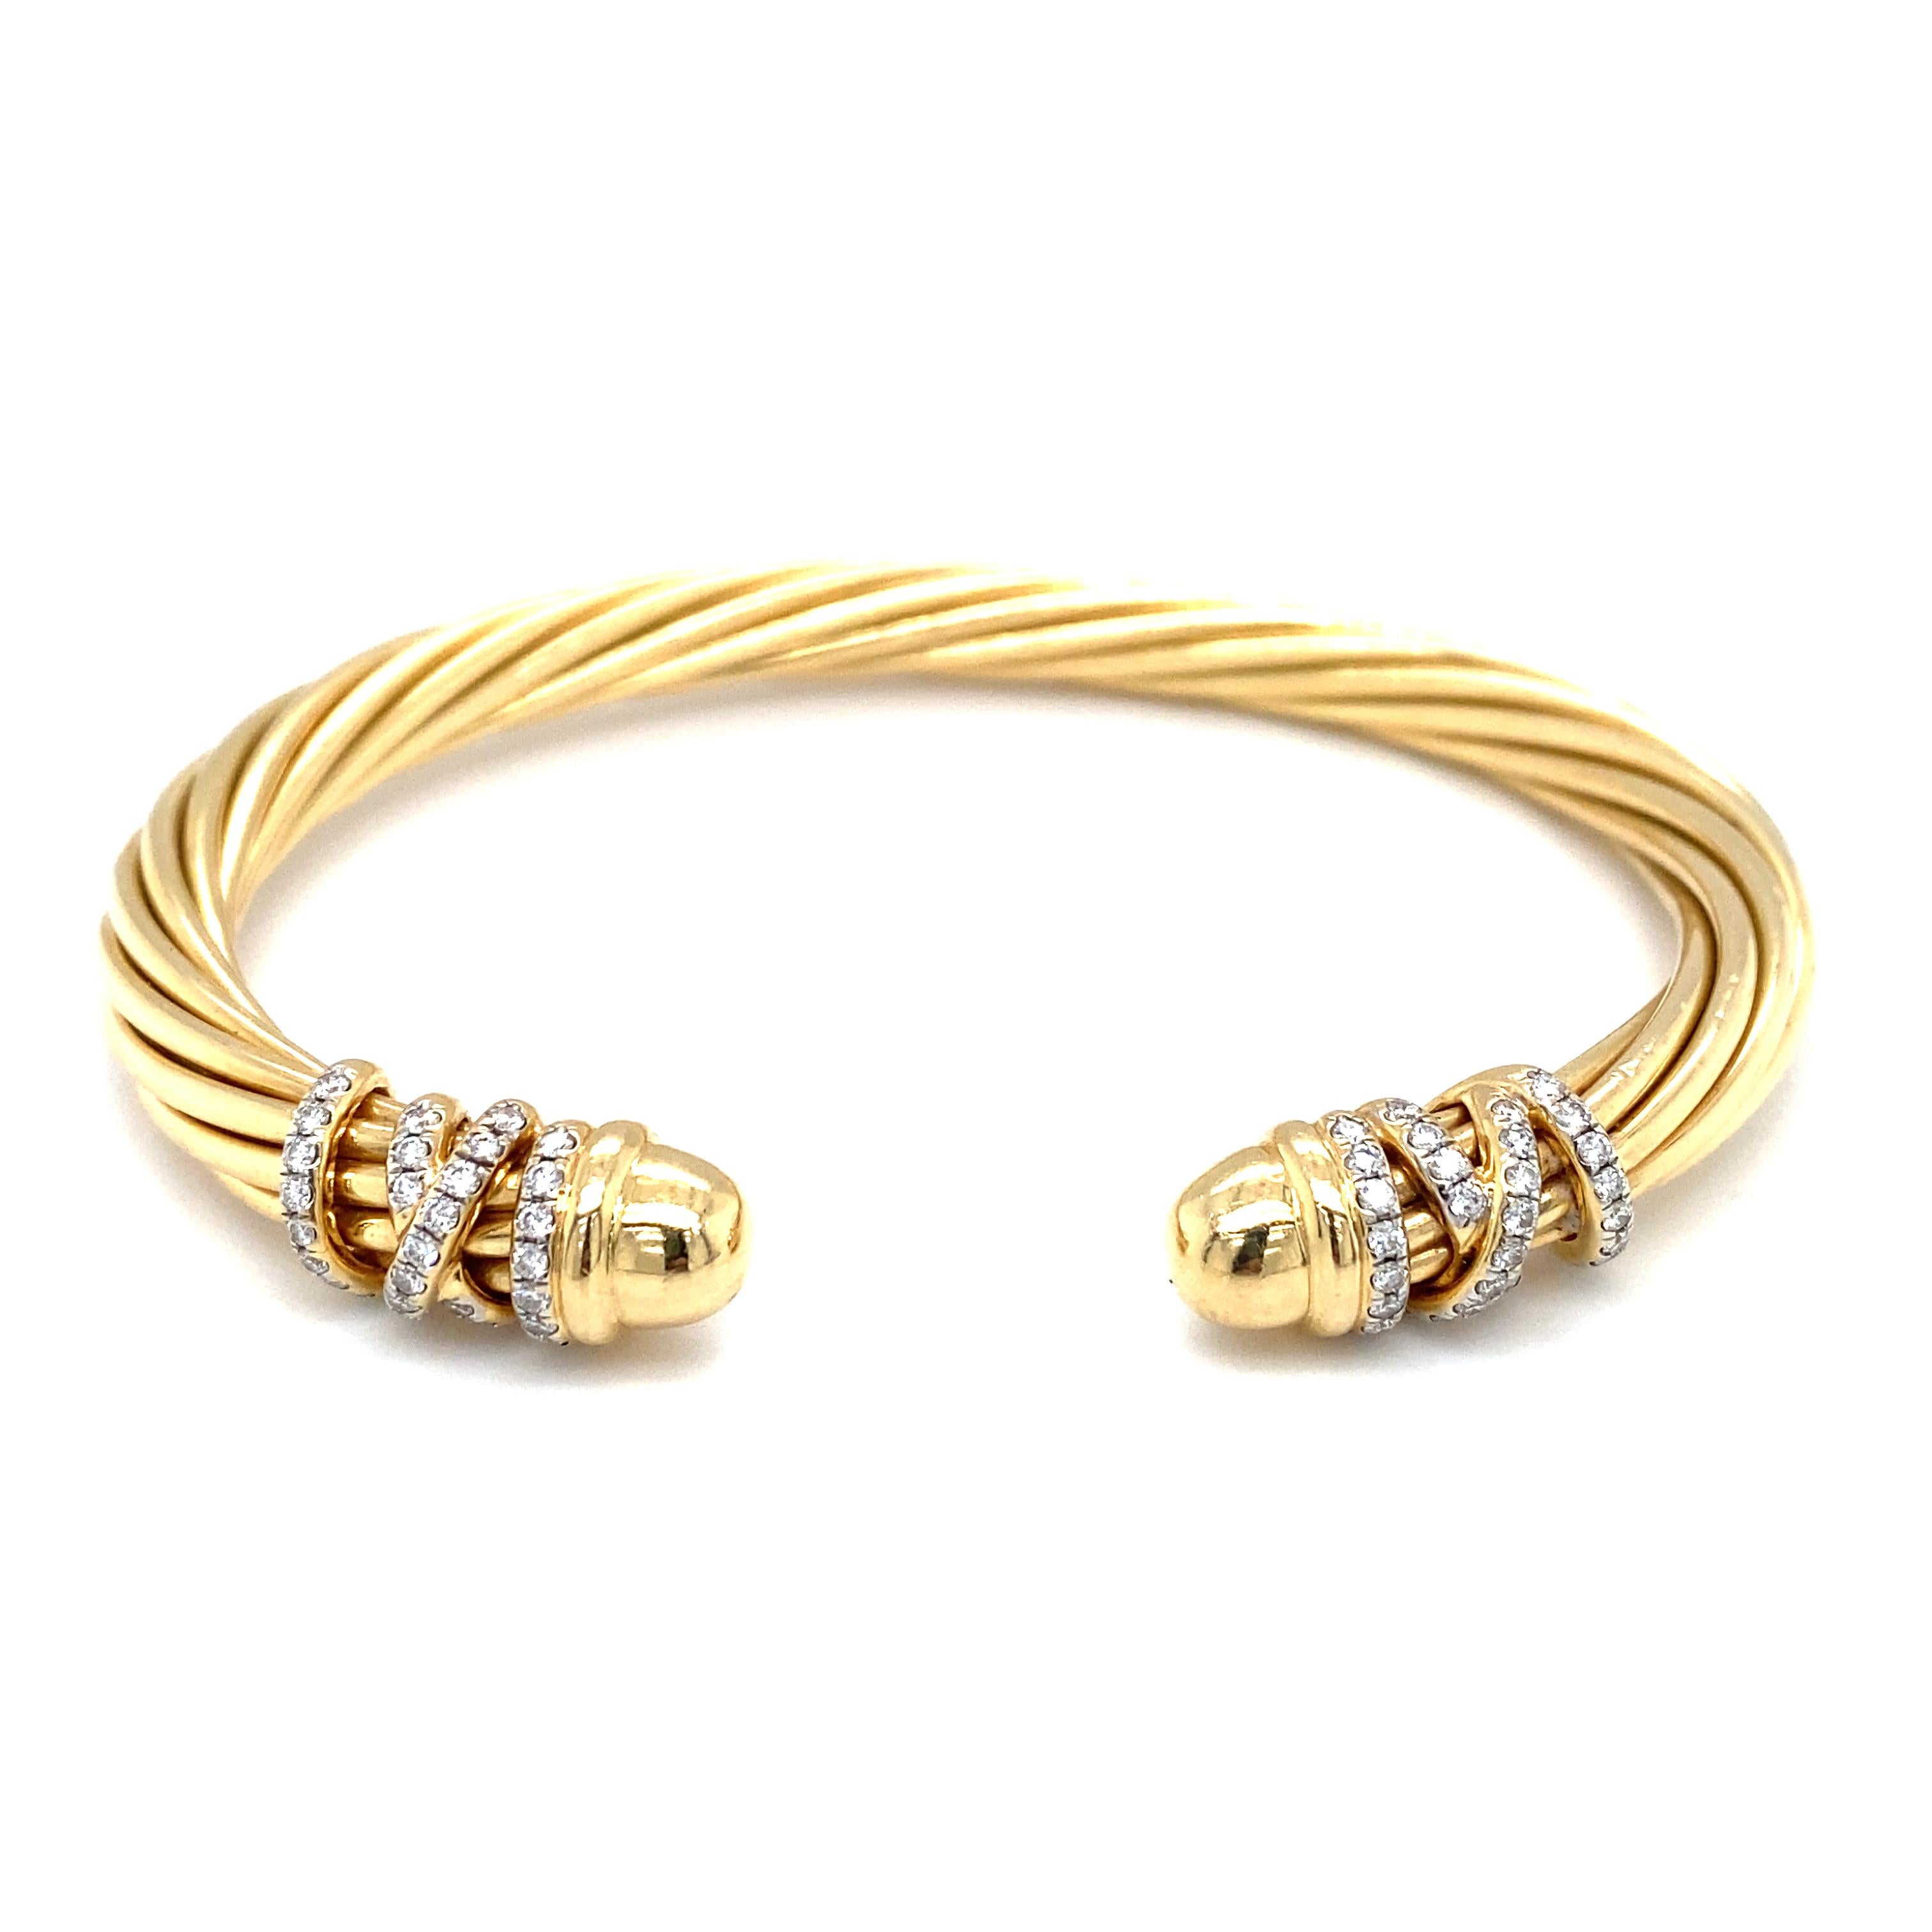 Round Cut David Yurman Helena Diamond Cuff Bracelet in 18 Karat Yellow Gold